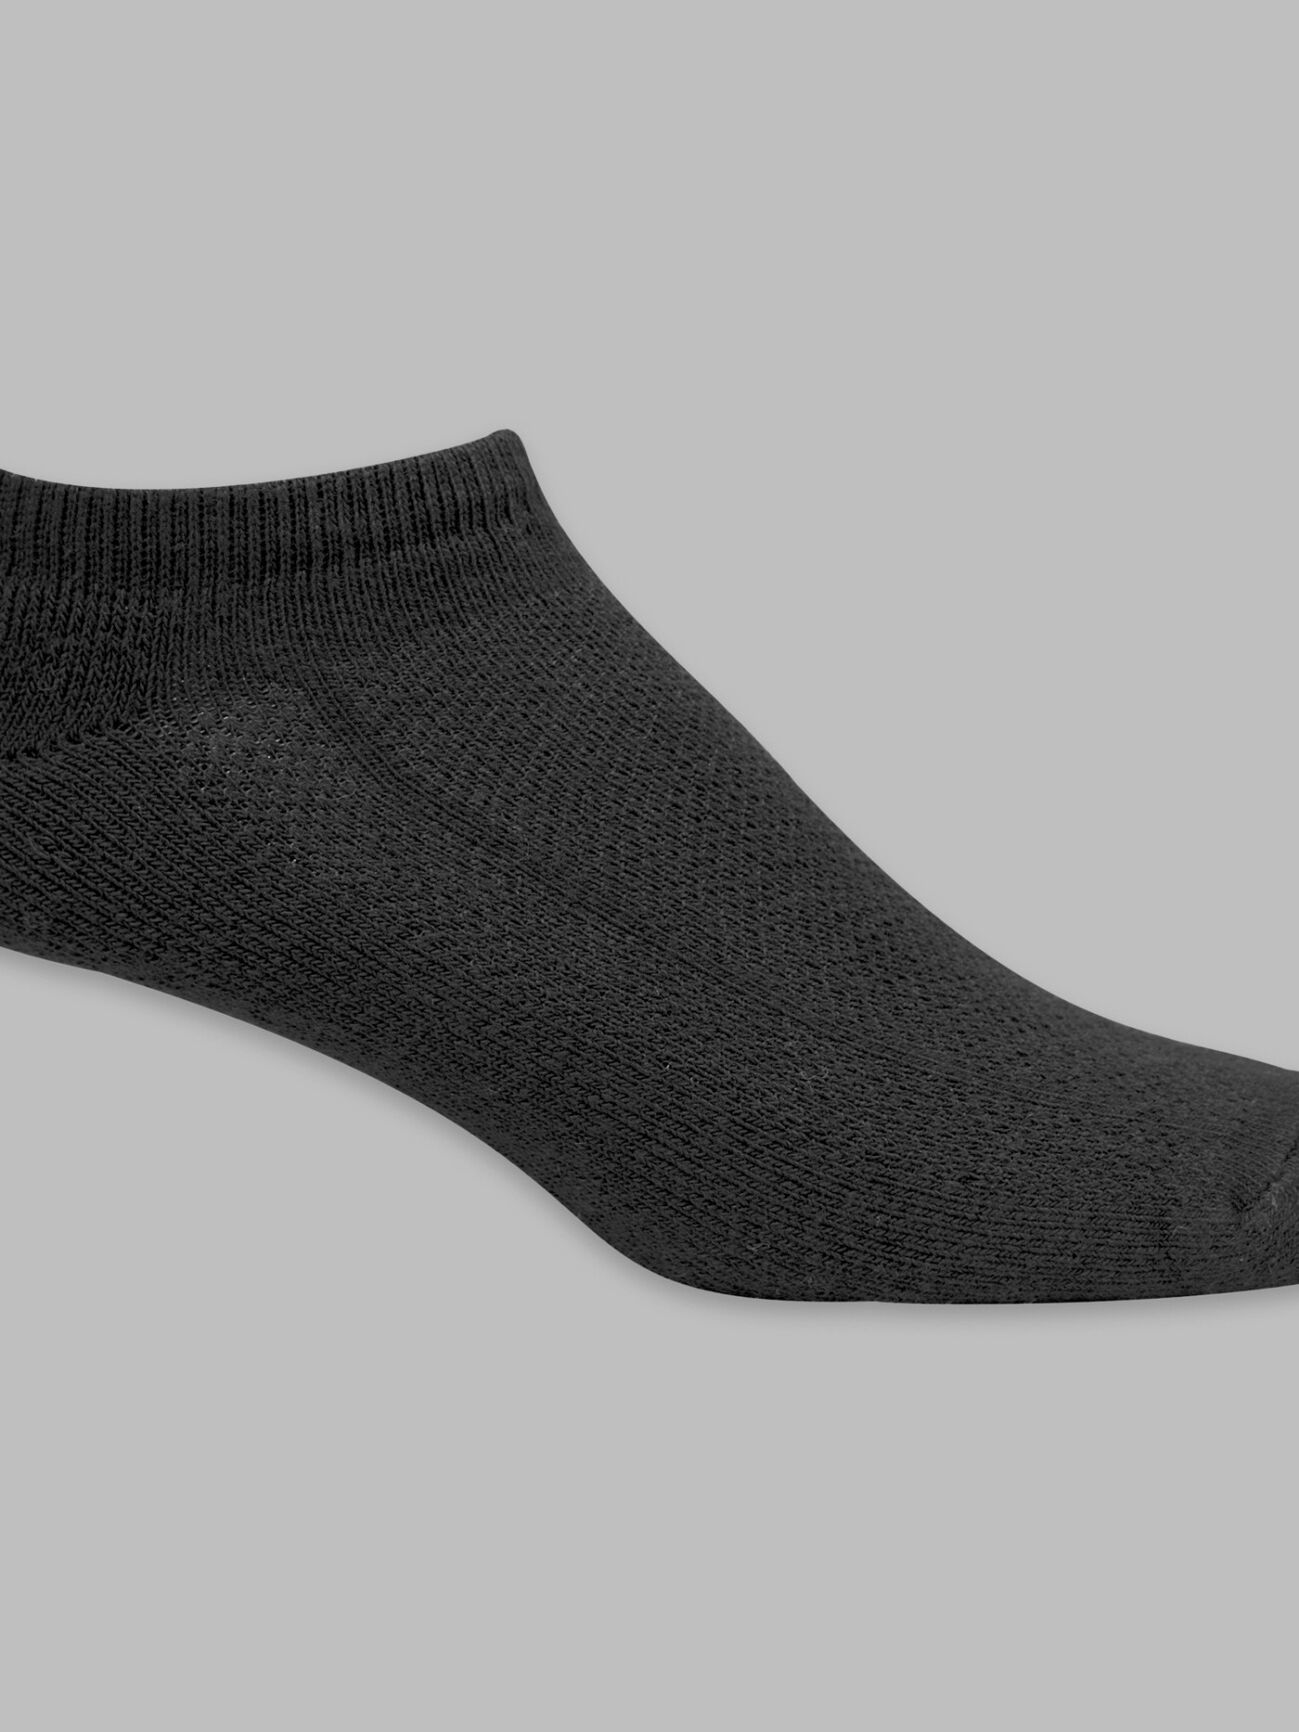 Men's Breathable No Show Socks Black, 6 Pack, Size 6-12 BLACK